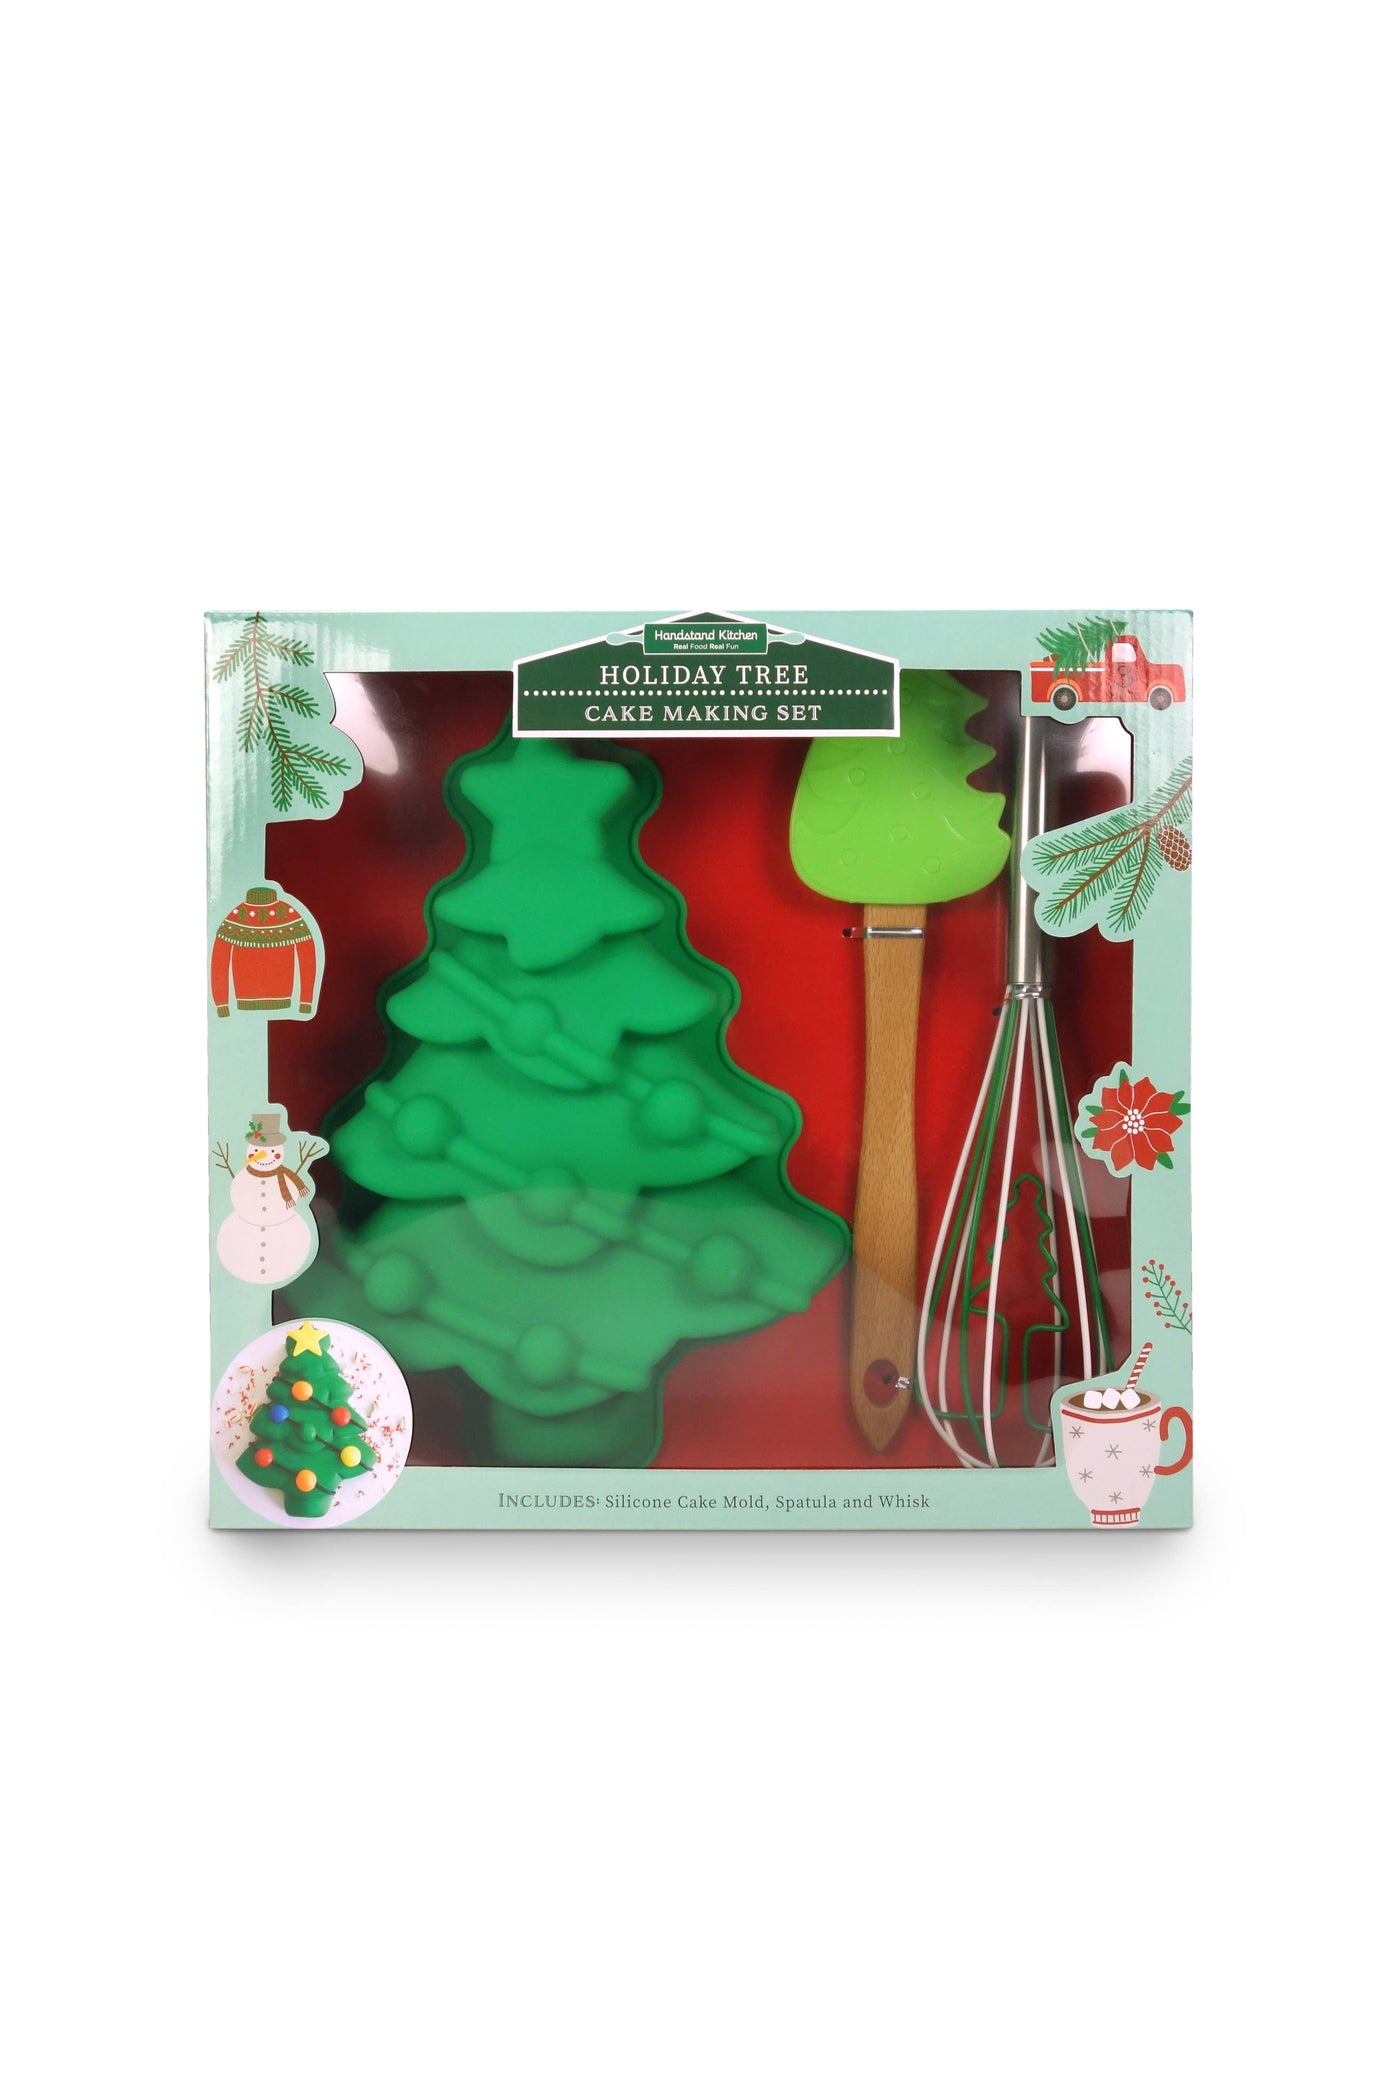 Handstand Kitchen - Holiday Tree Cake Baking Set